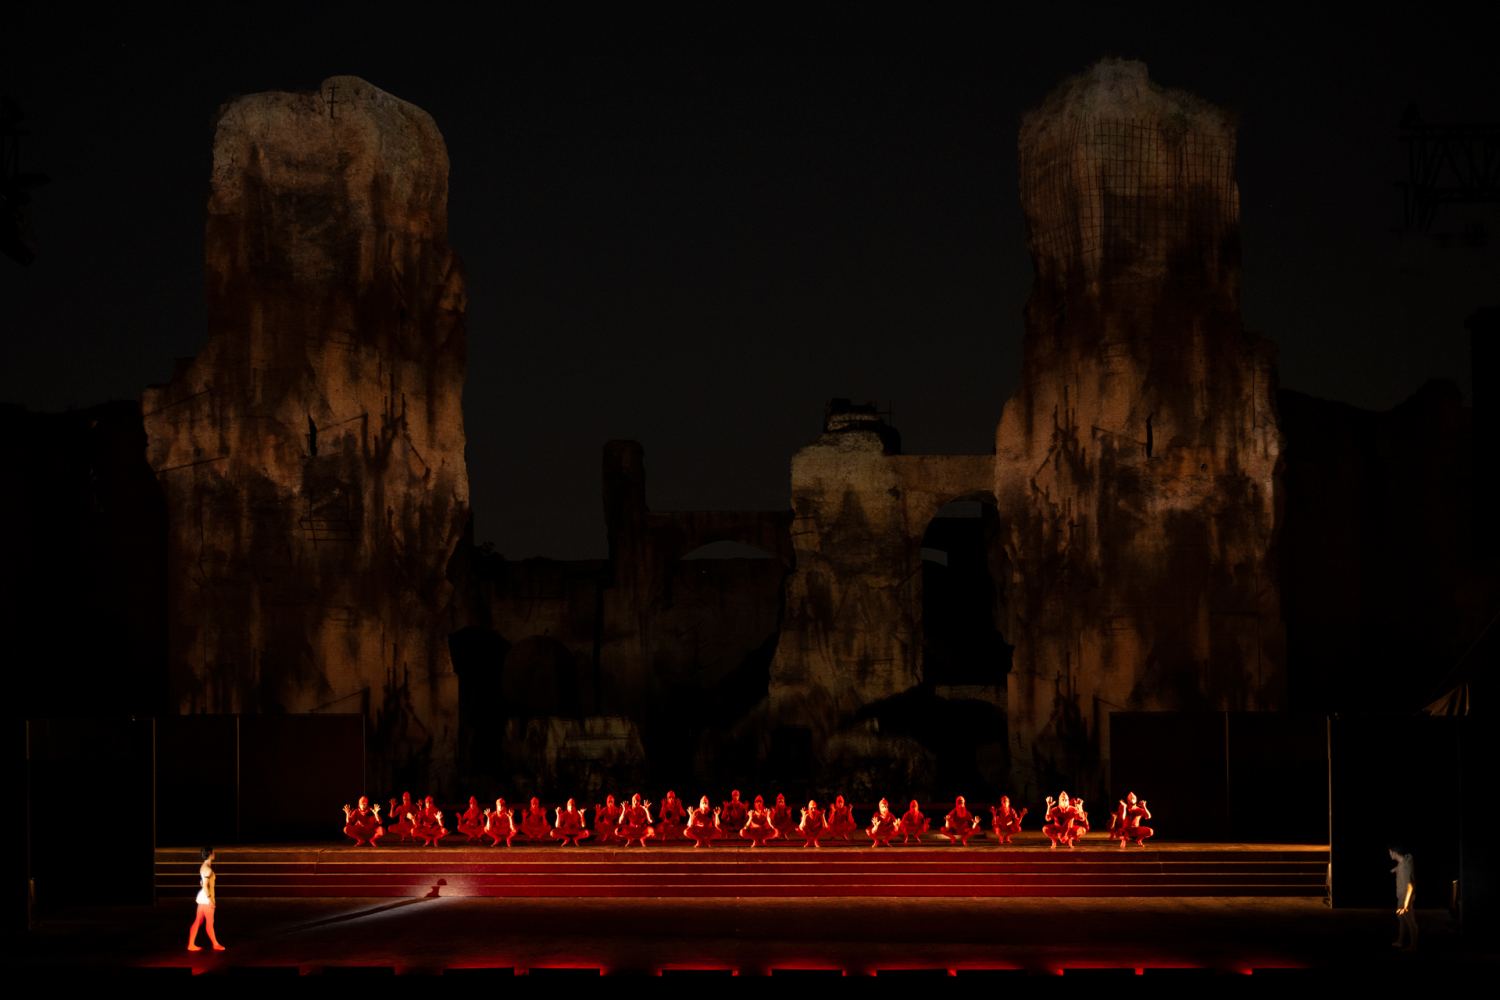 10. Ensemble, “Notre-Dame de Paris” by R.Petit, Ballet of the Teatro dell’Opera di Roma 2022 © F.Sansoni / Teatro dell’Opera di Roma